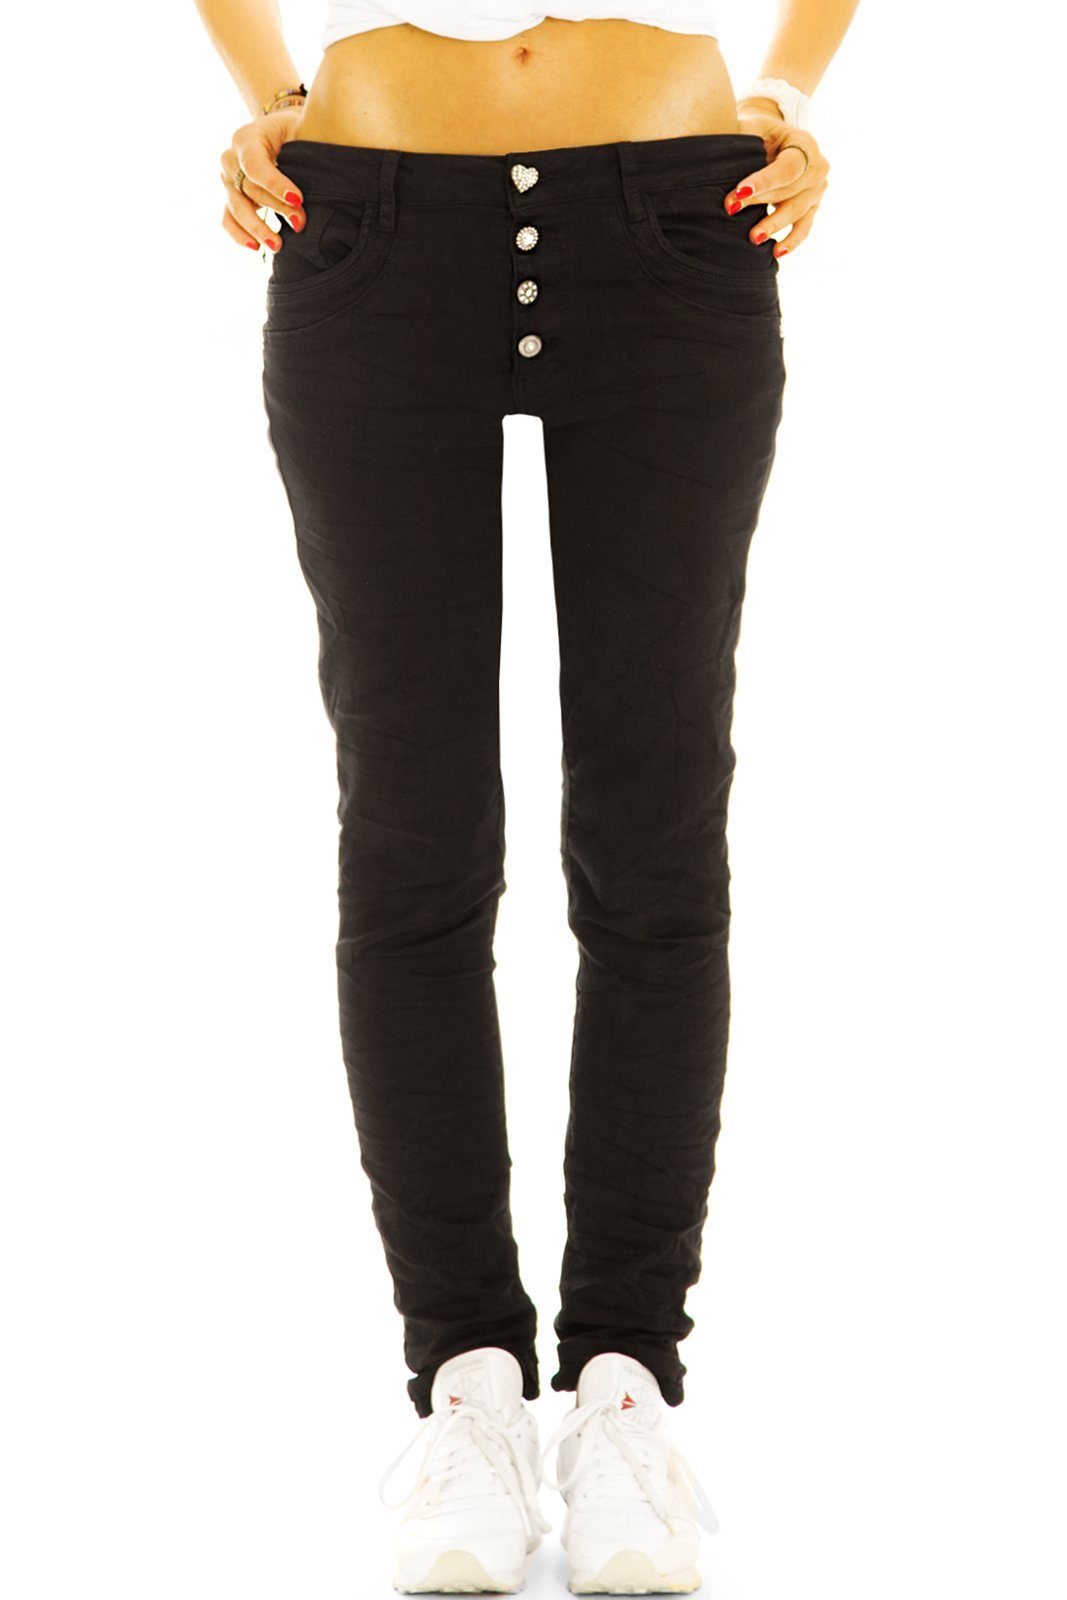 be styled Low-rise-Jeans Low Waist Hose hüftige Röhrenjeans Slim Fit Hüftjeans - Damen - j43l-1 mit Stretch-Anteil, 5-Pocket-Style, hftig, low waist, low rise